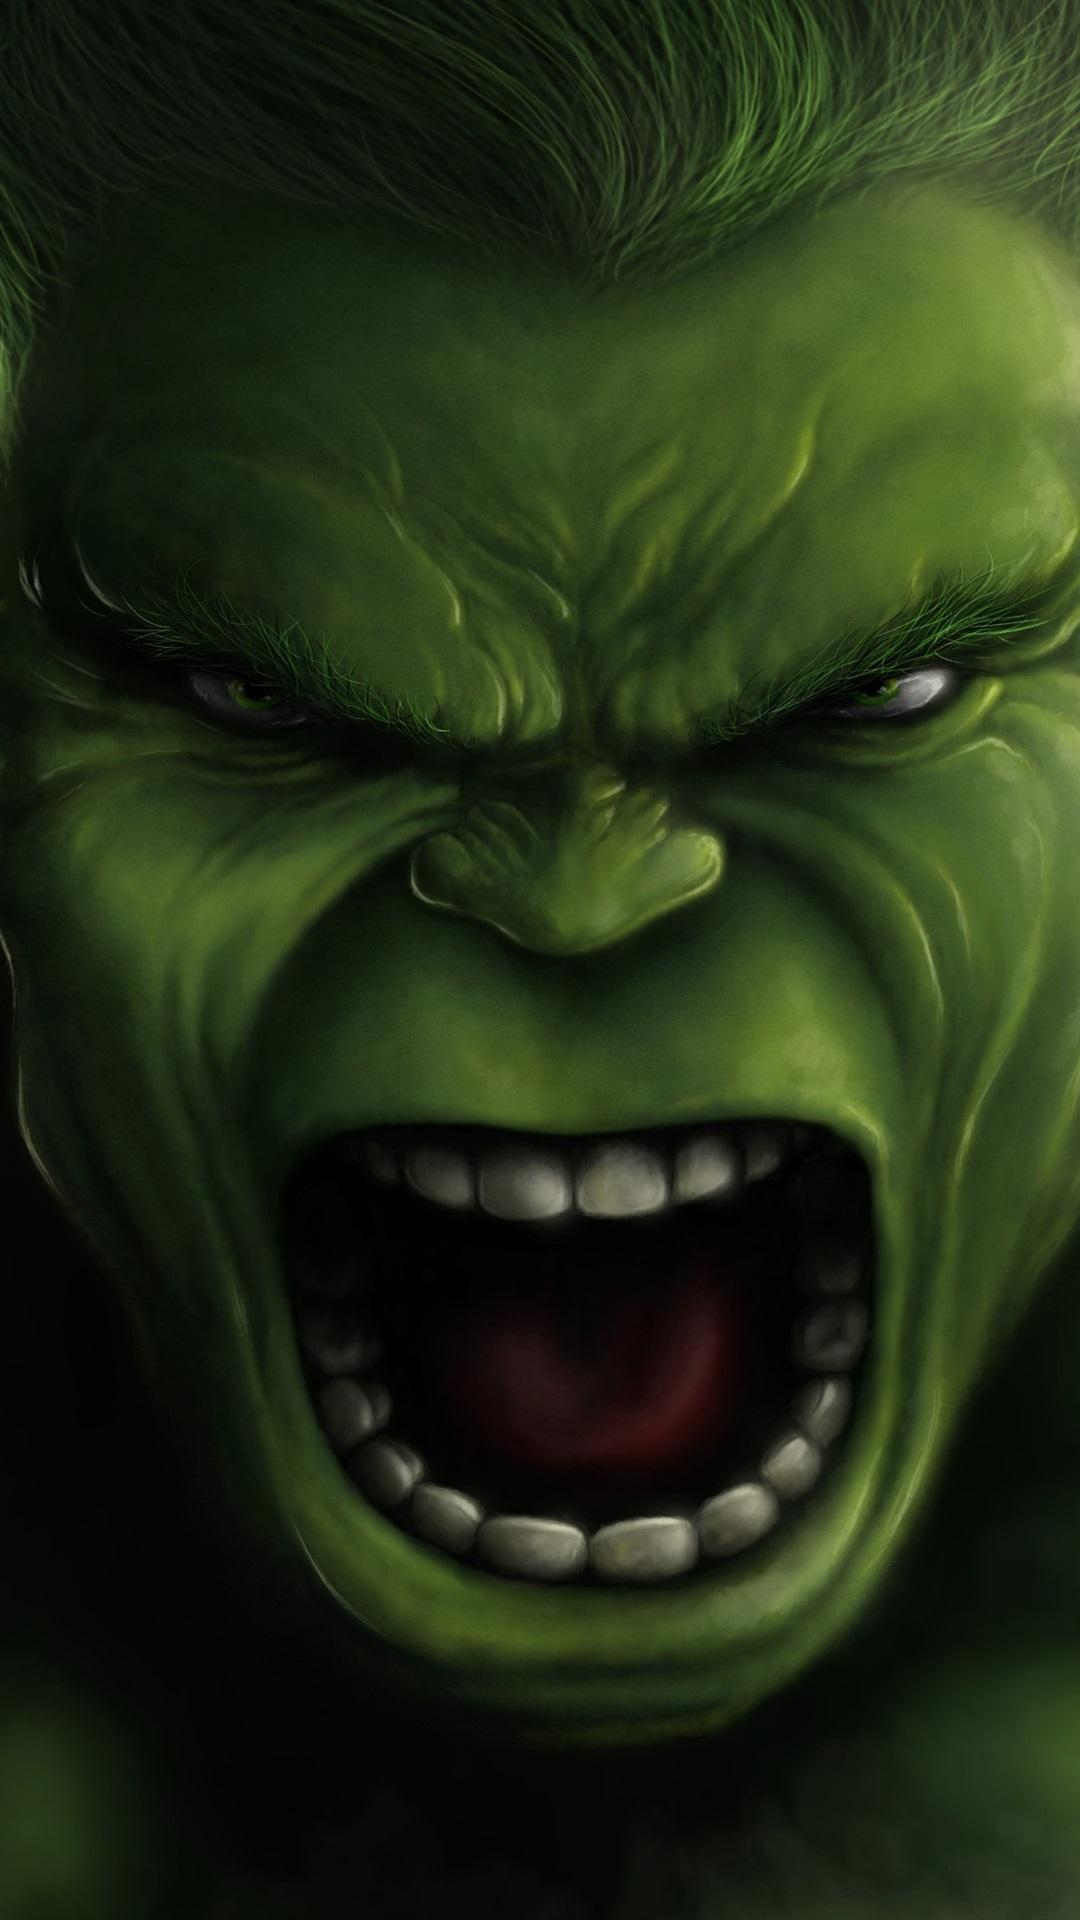 The Hulk, face, Marvel Comics, art picture 1080x1920 iPhone